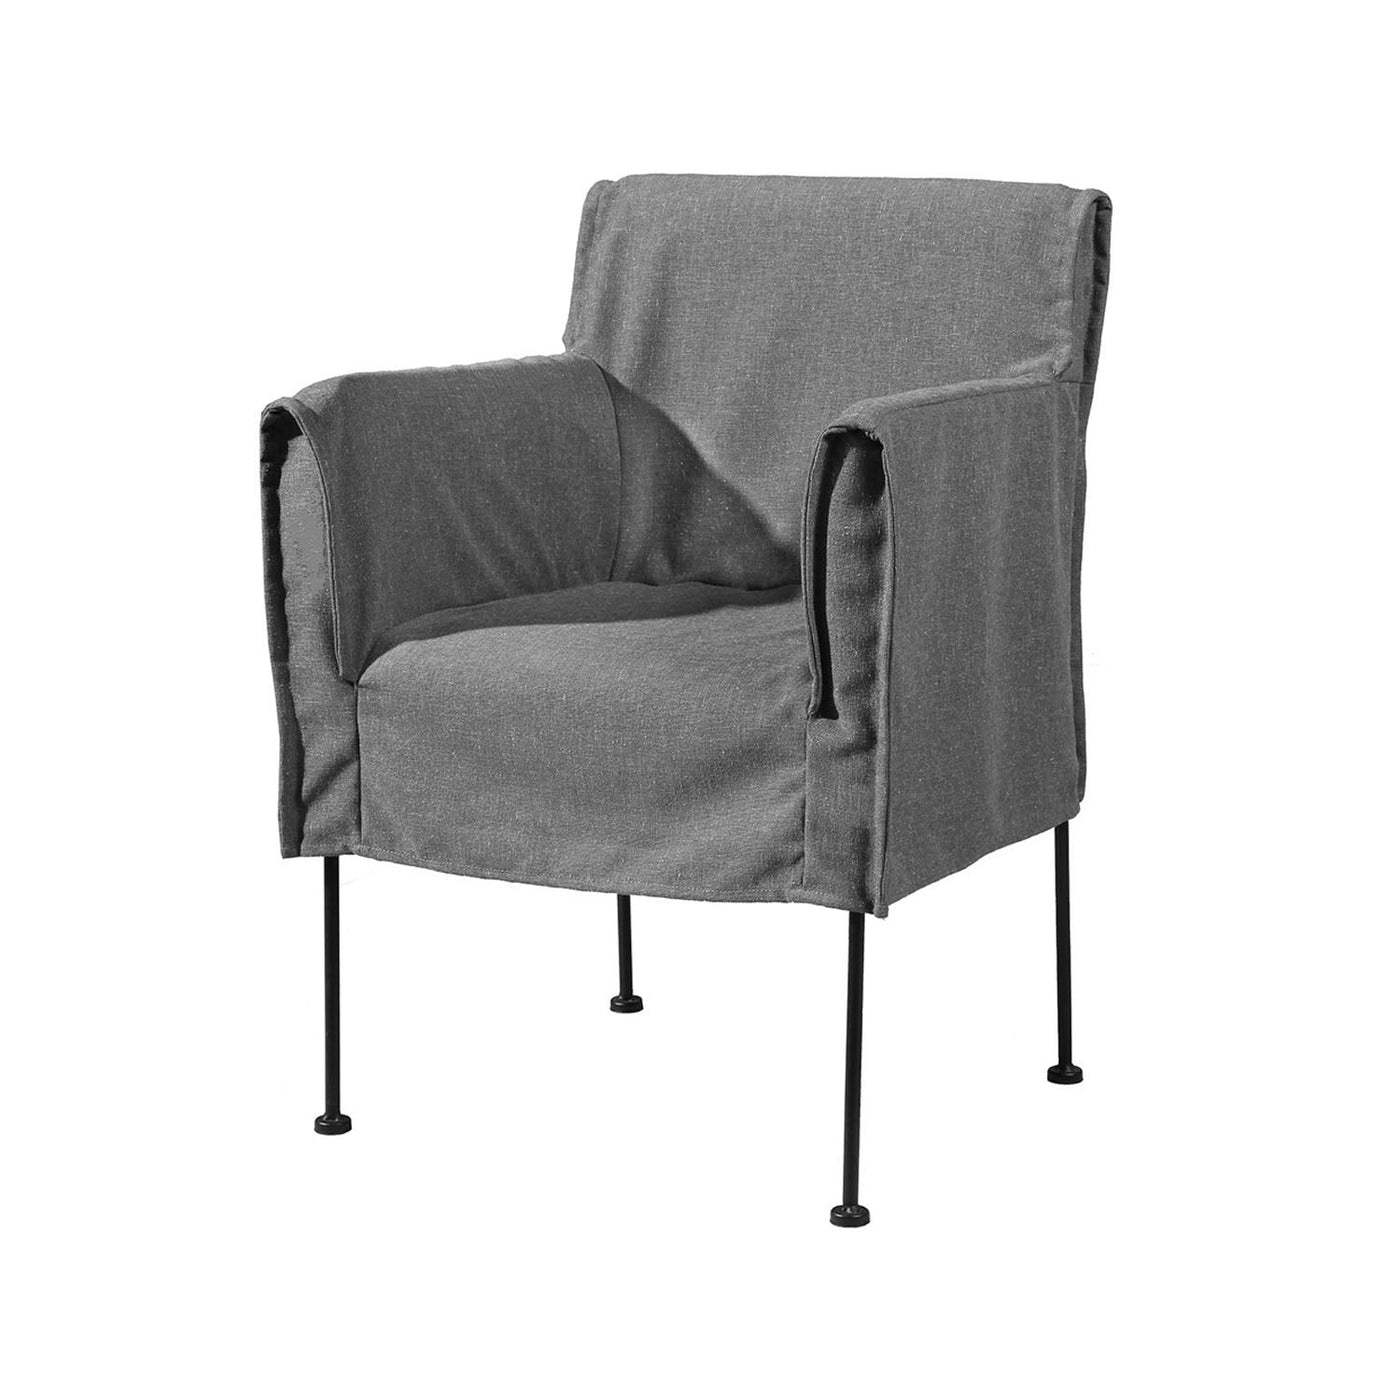 Capri Captain Chair with Grey Slipcover